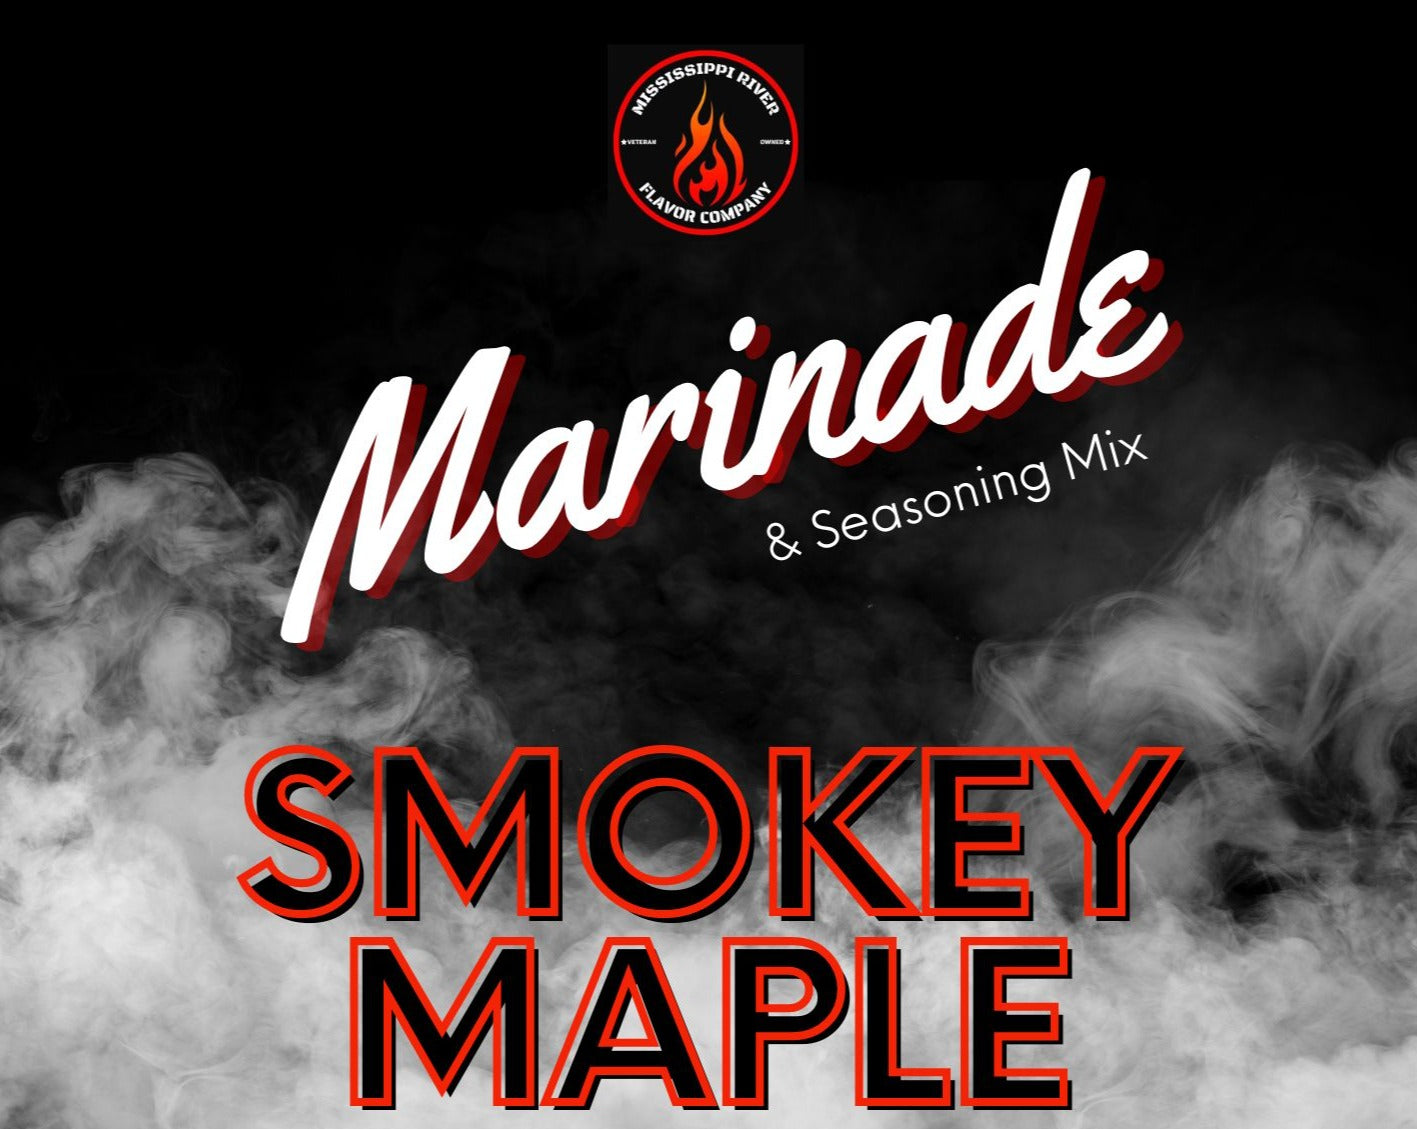 Smokey Maple Marinade